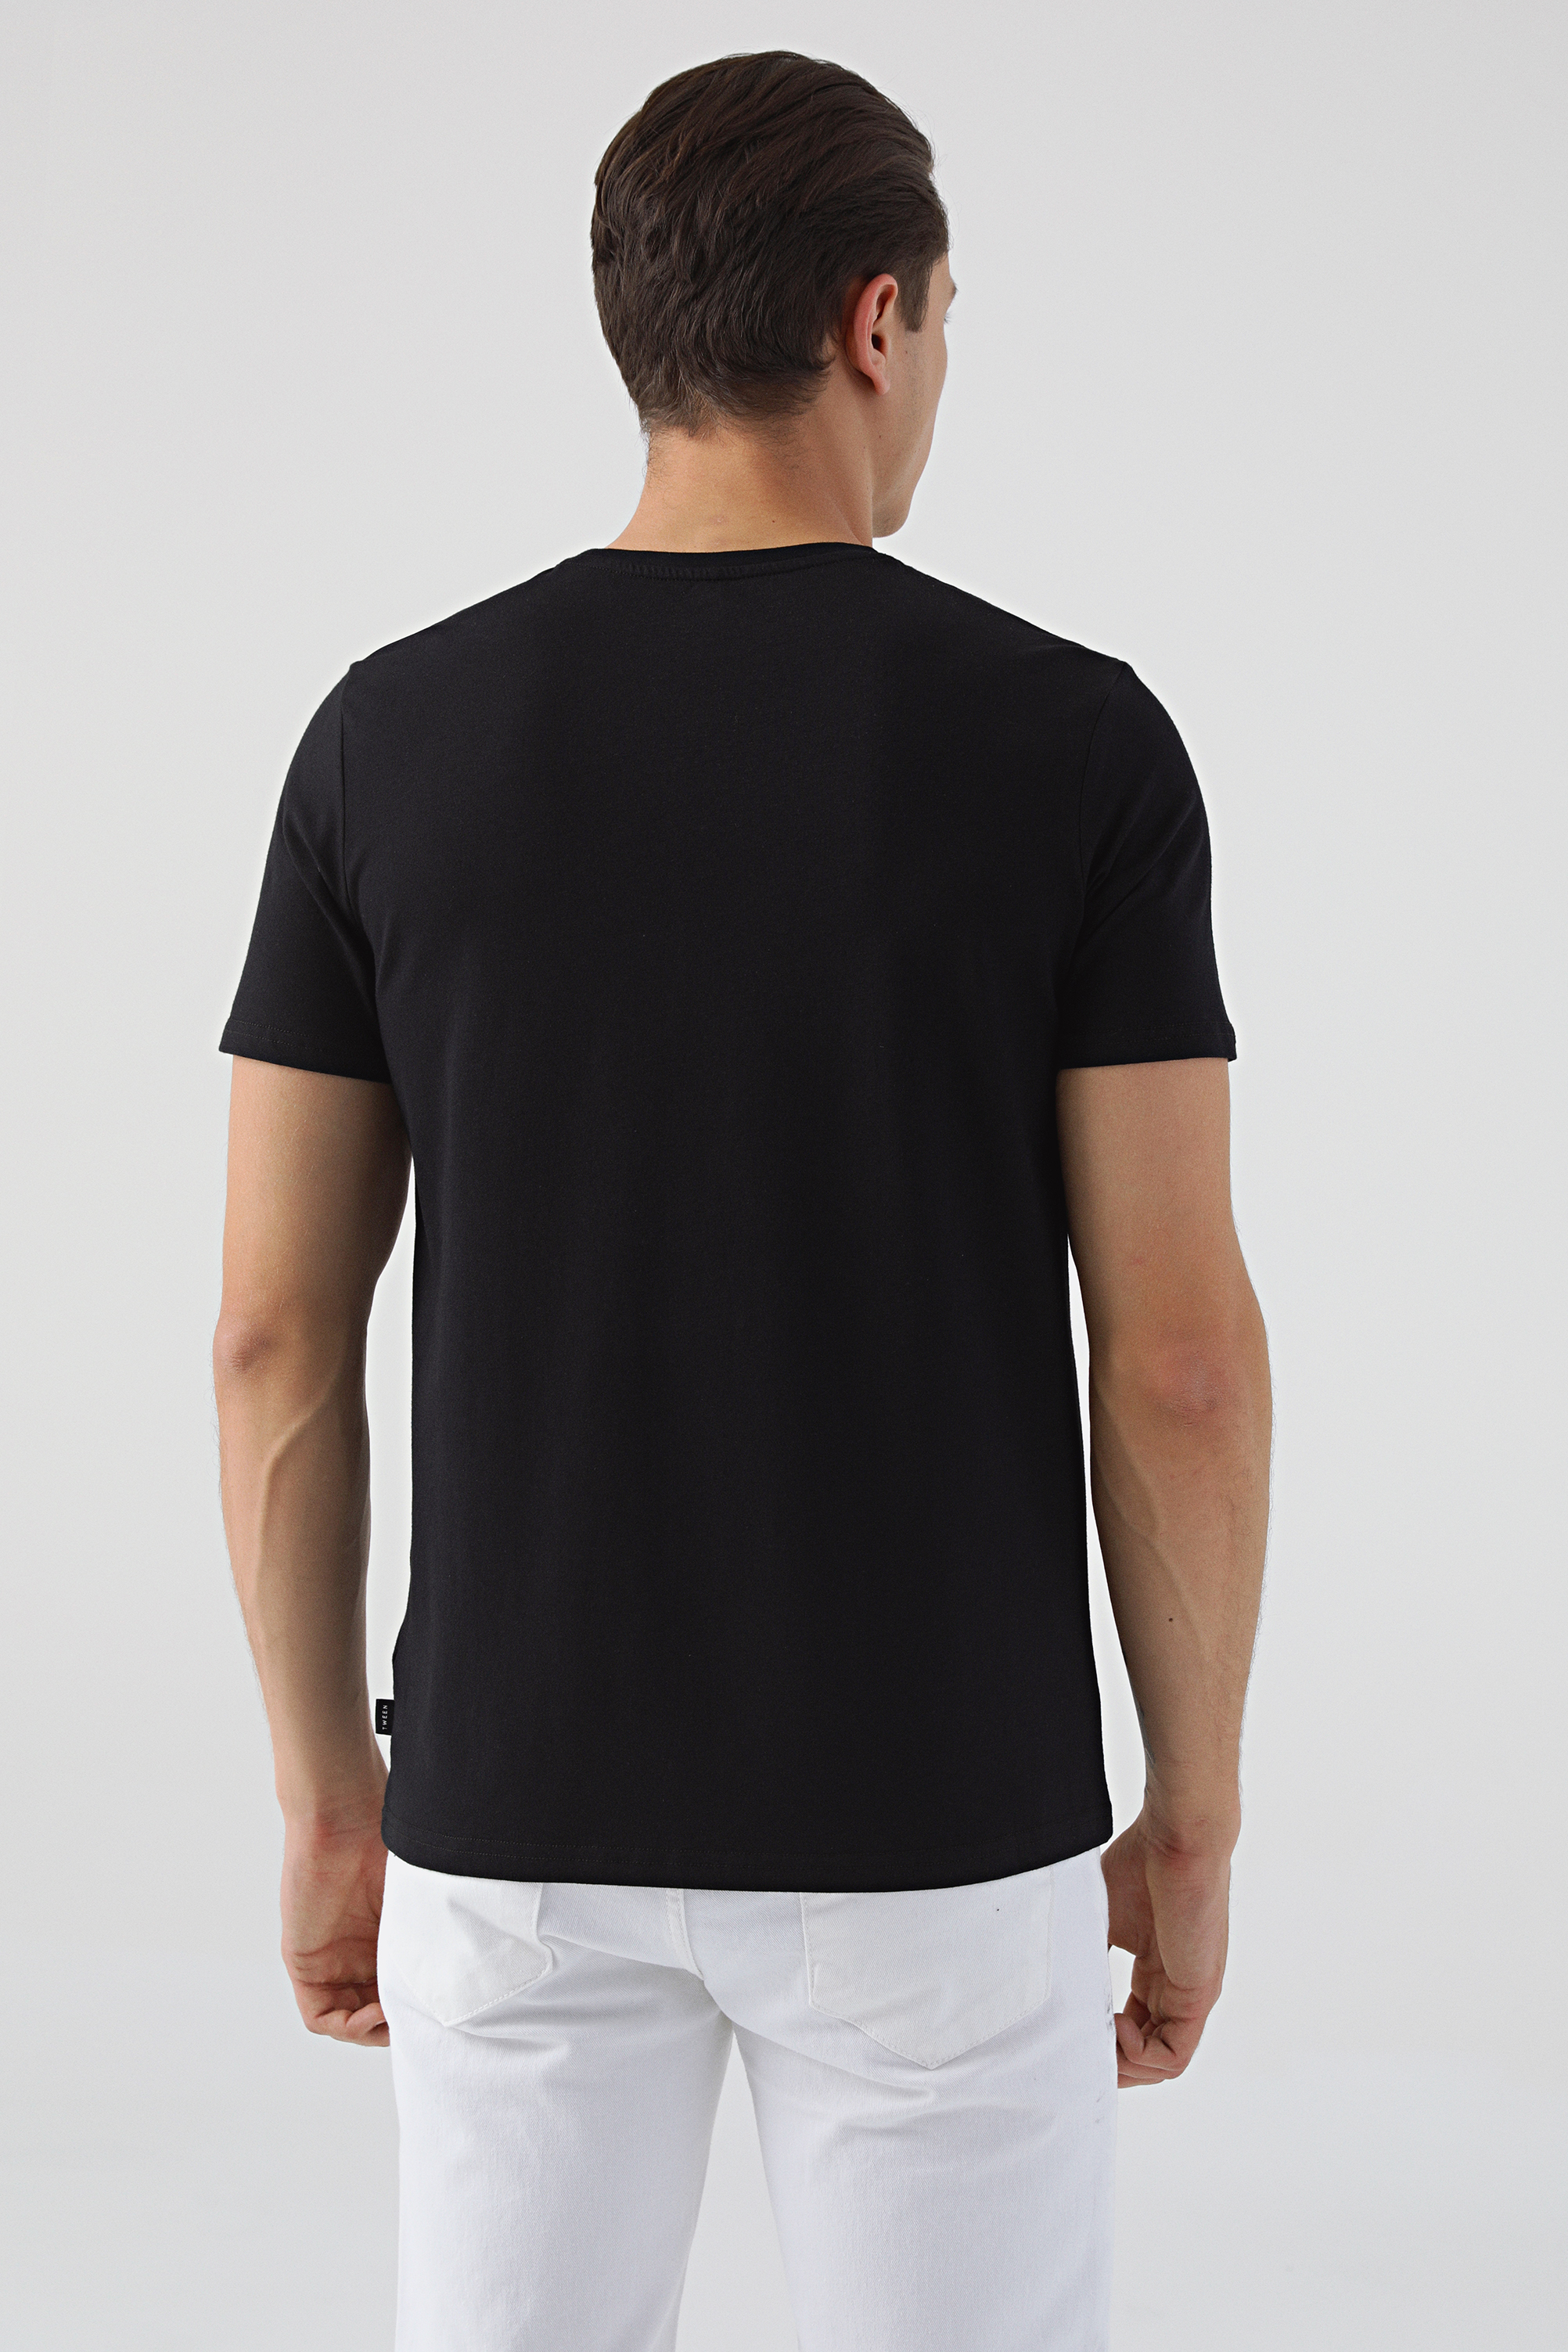 Damat Tween Tween Siyah T-Shirt. 4